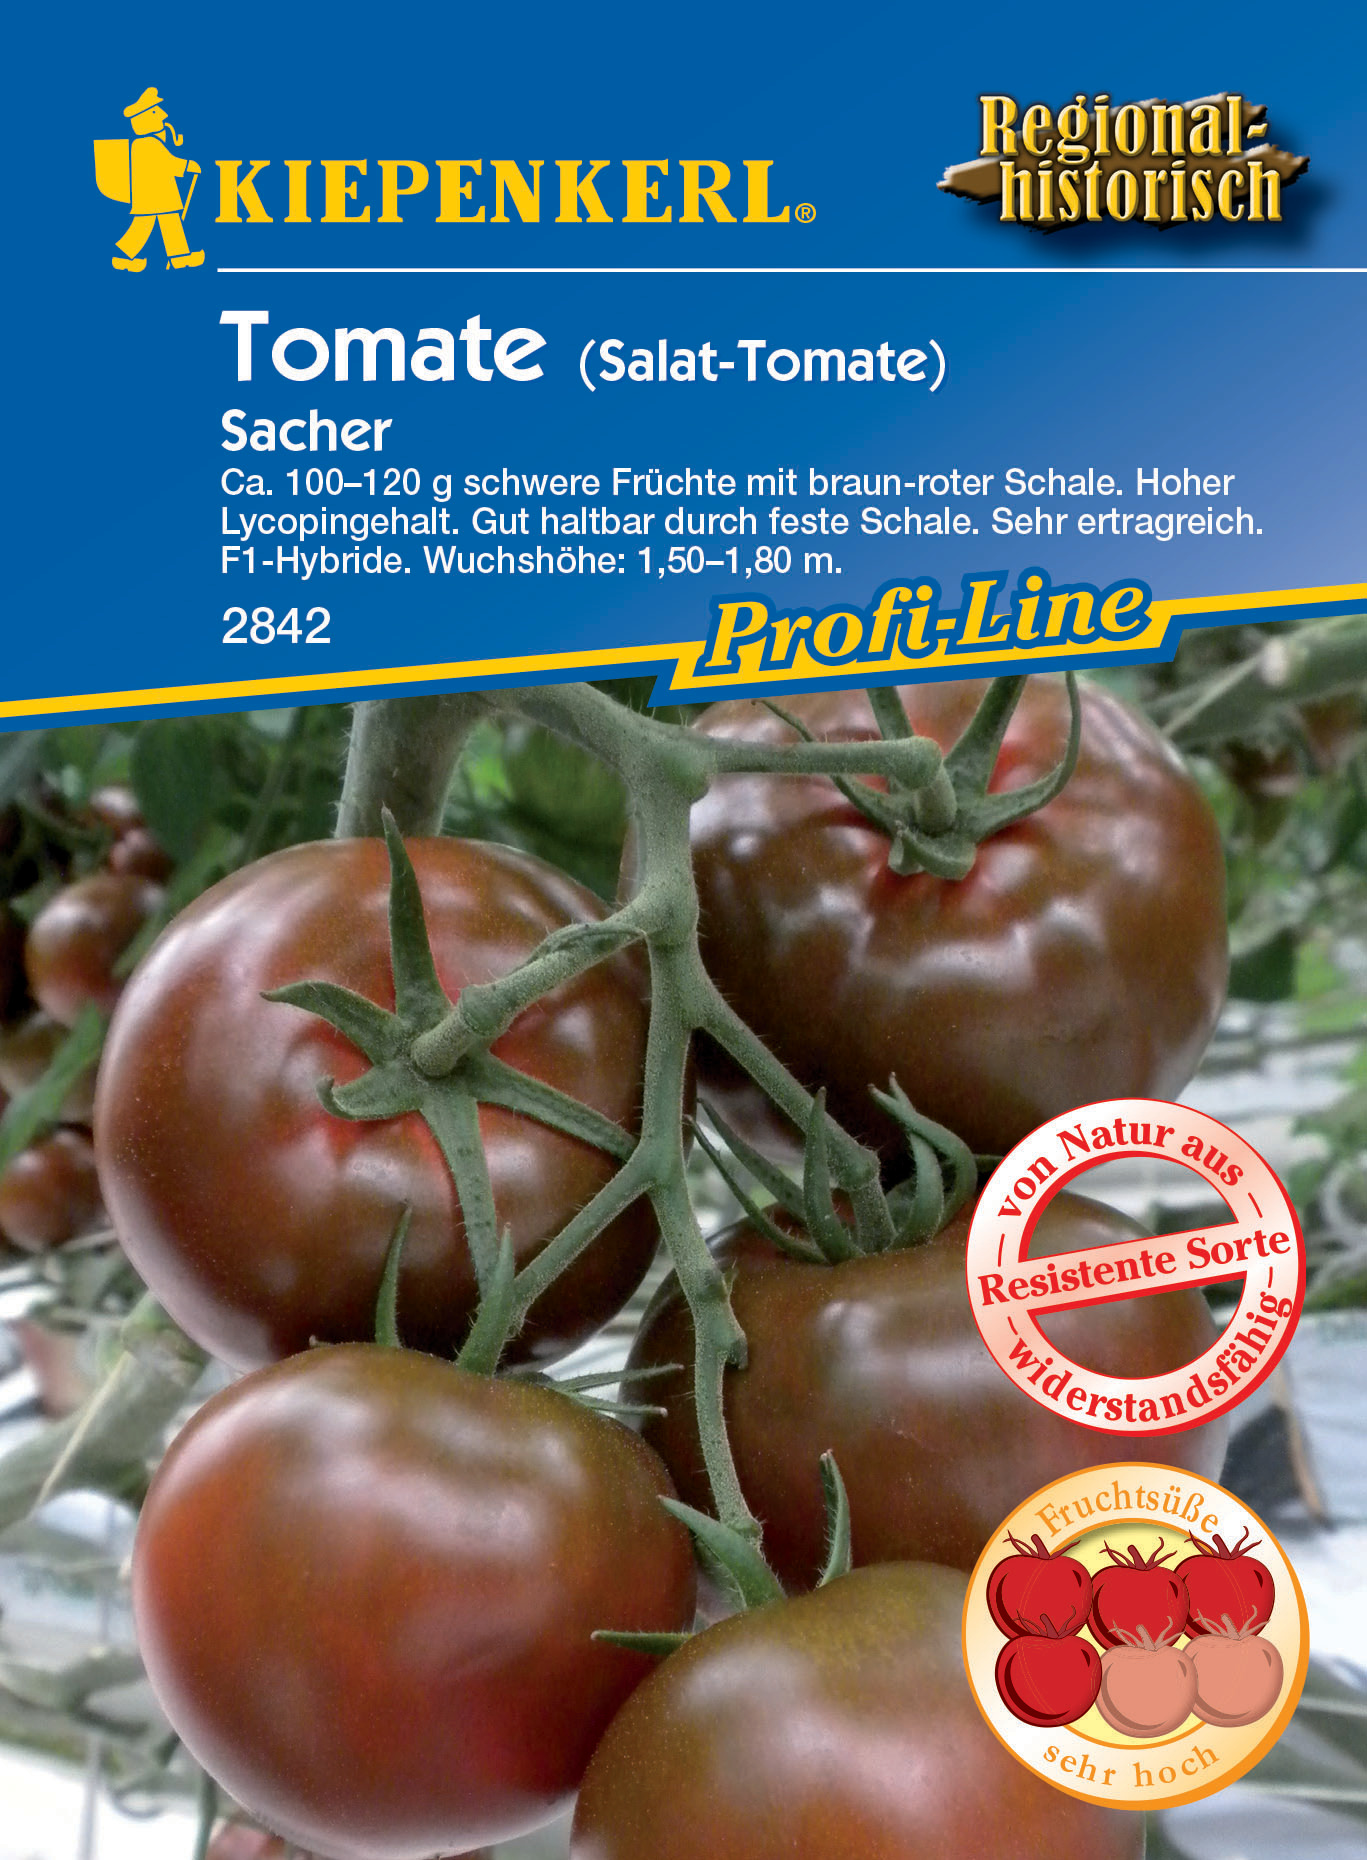 Salat-Tomate Sacher, F1